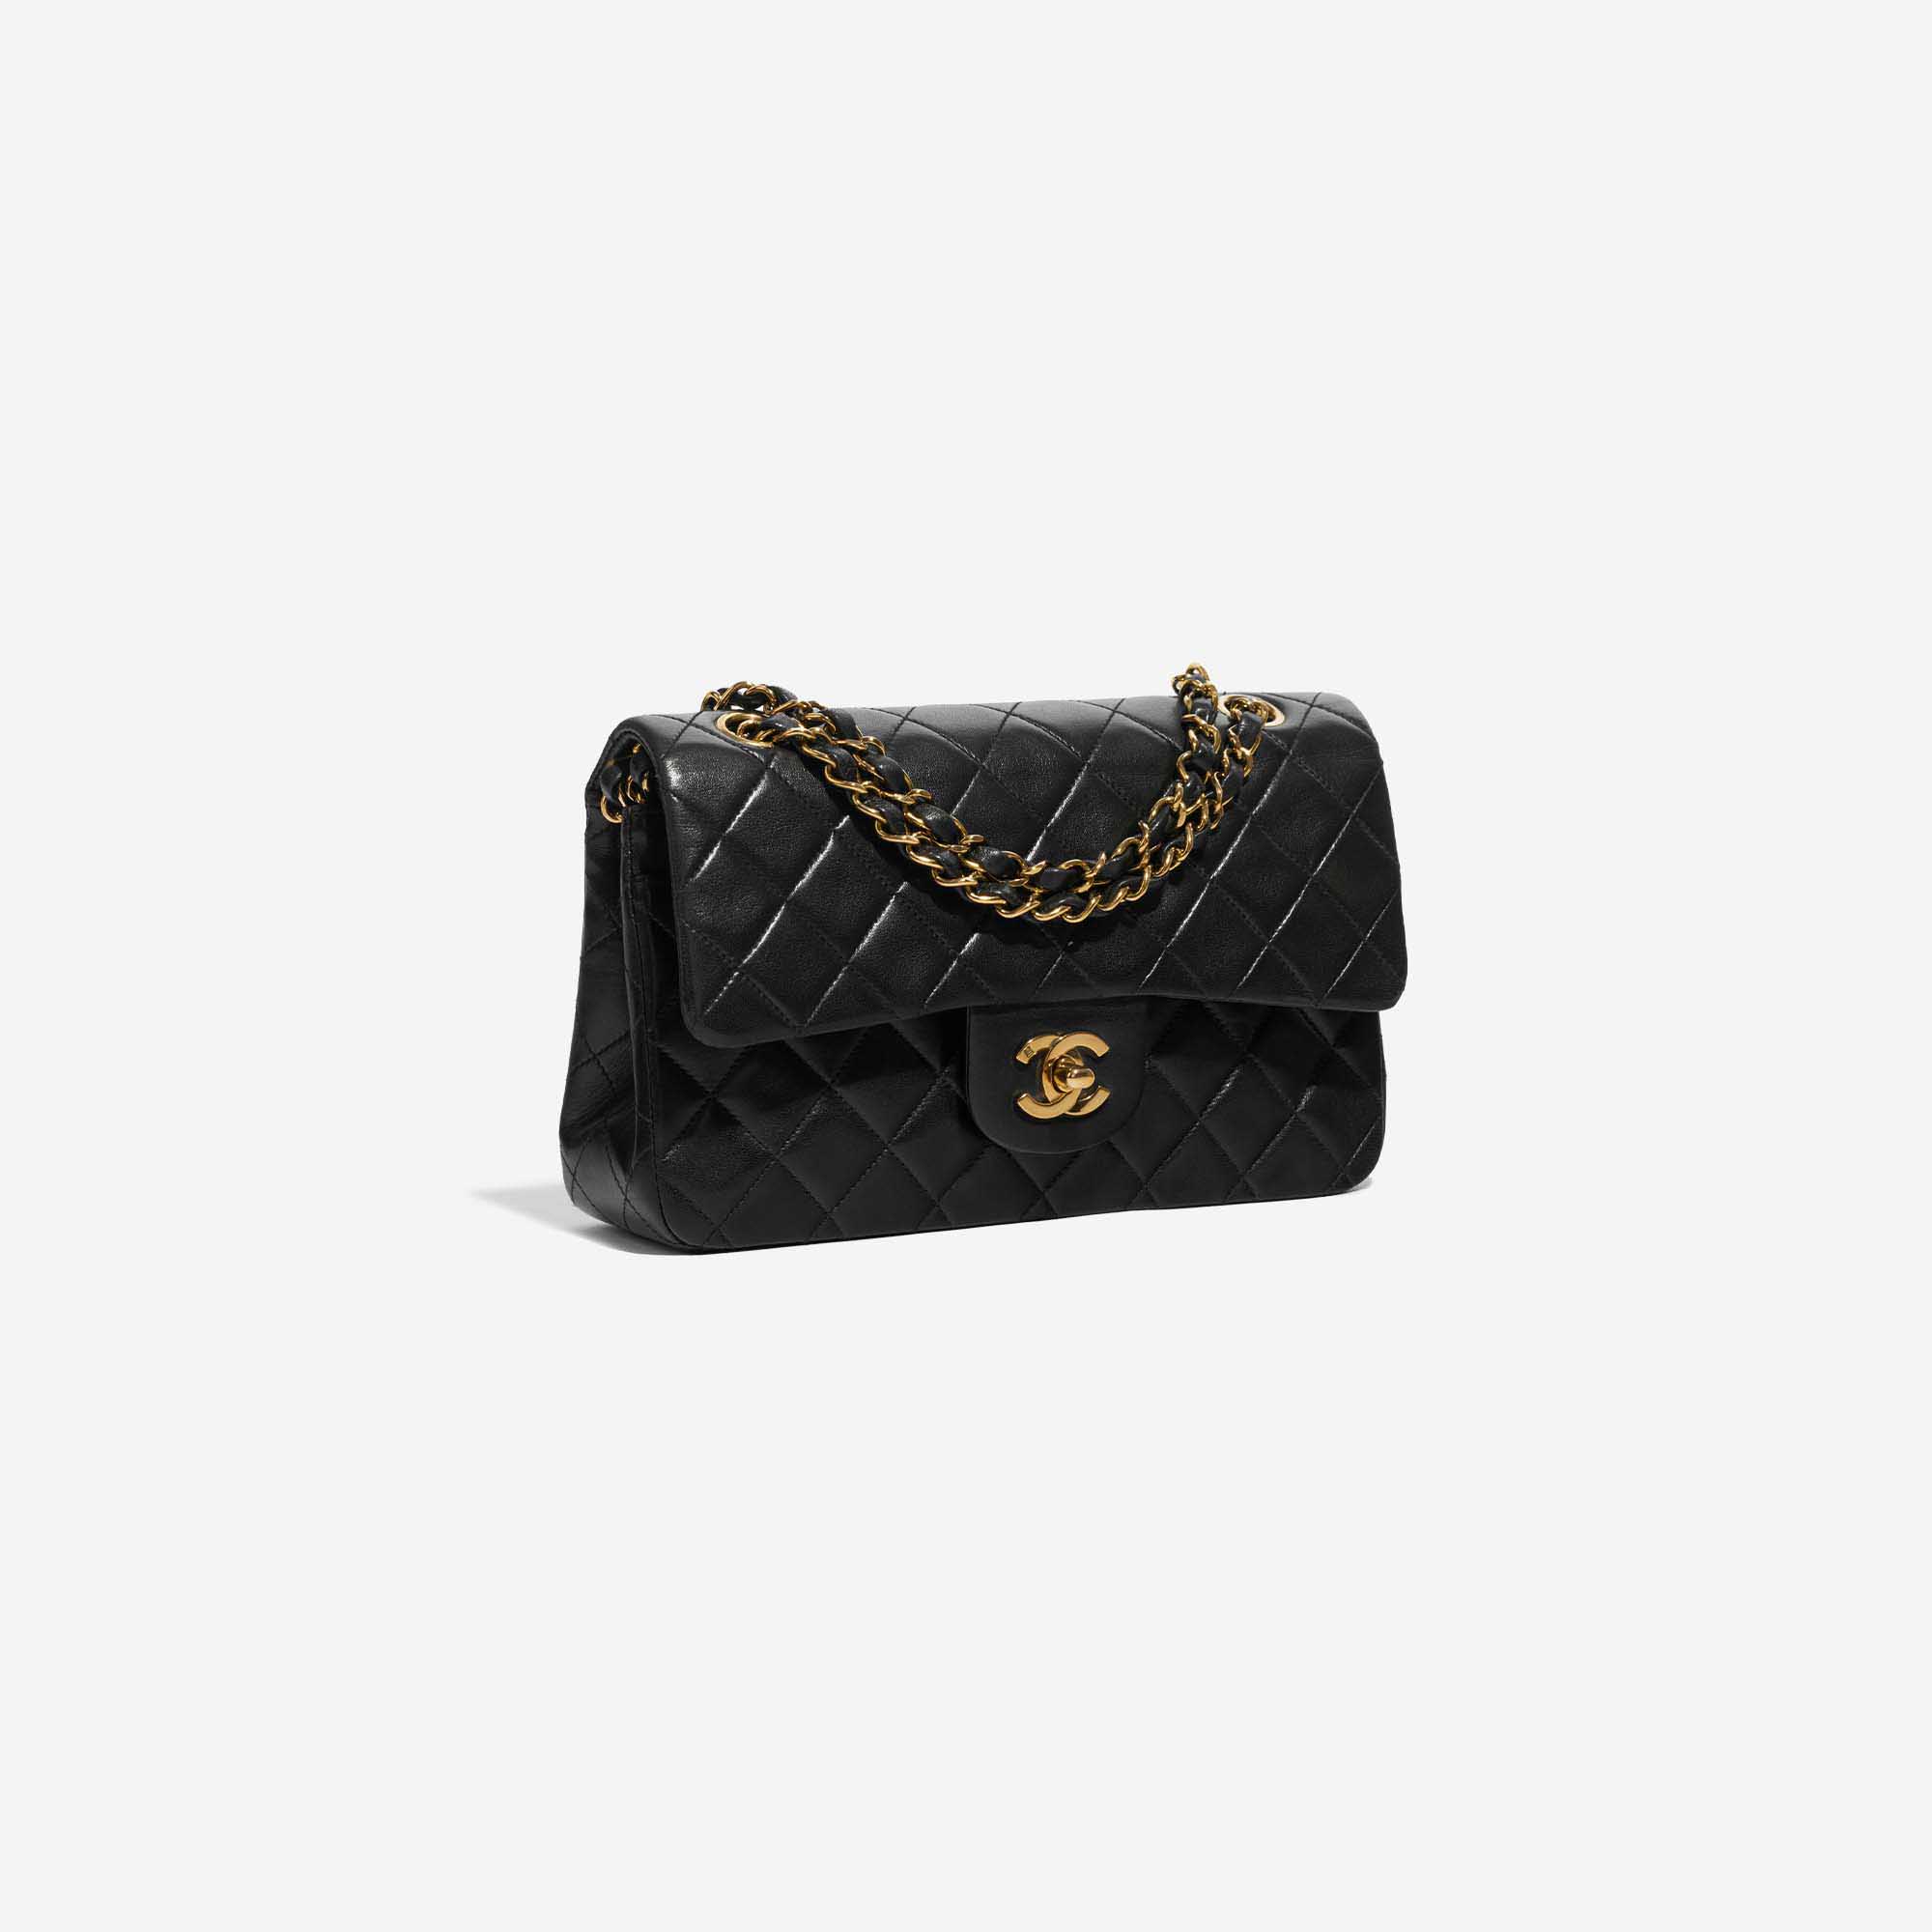 RARE Chanel Classic Flap Small - Black Lambskin, Rose Gold Hardware